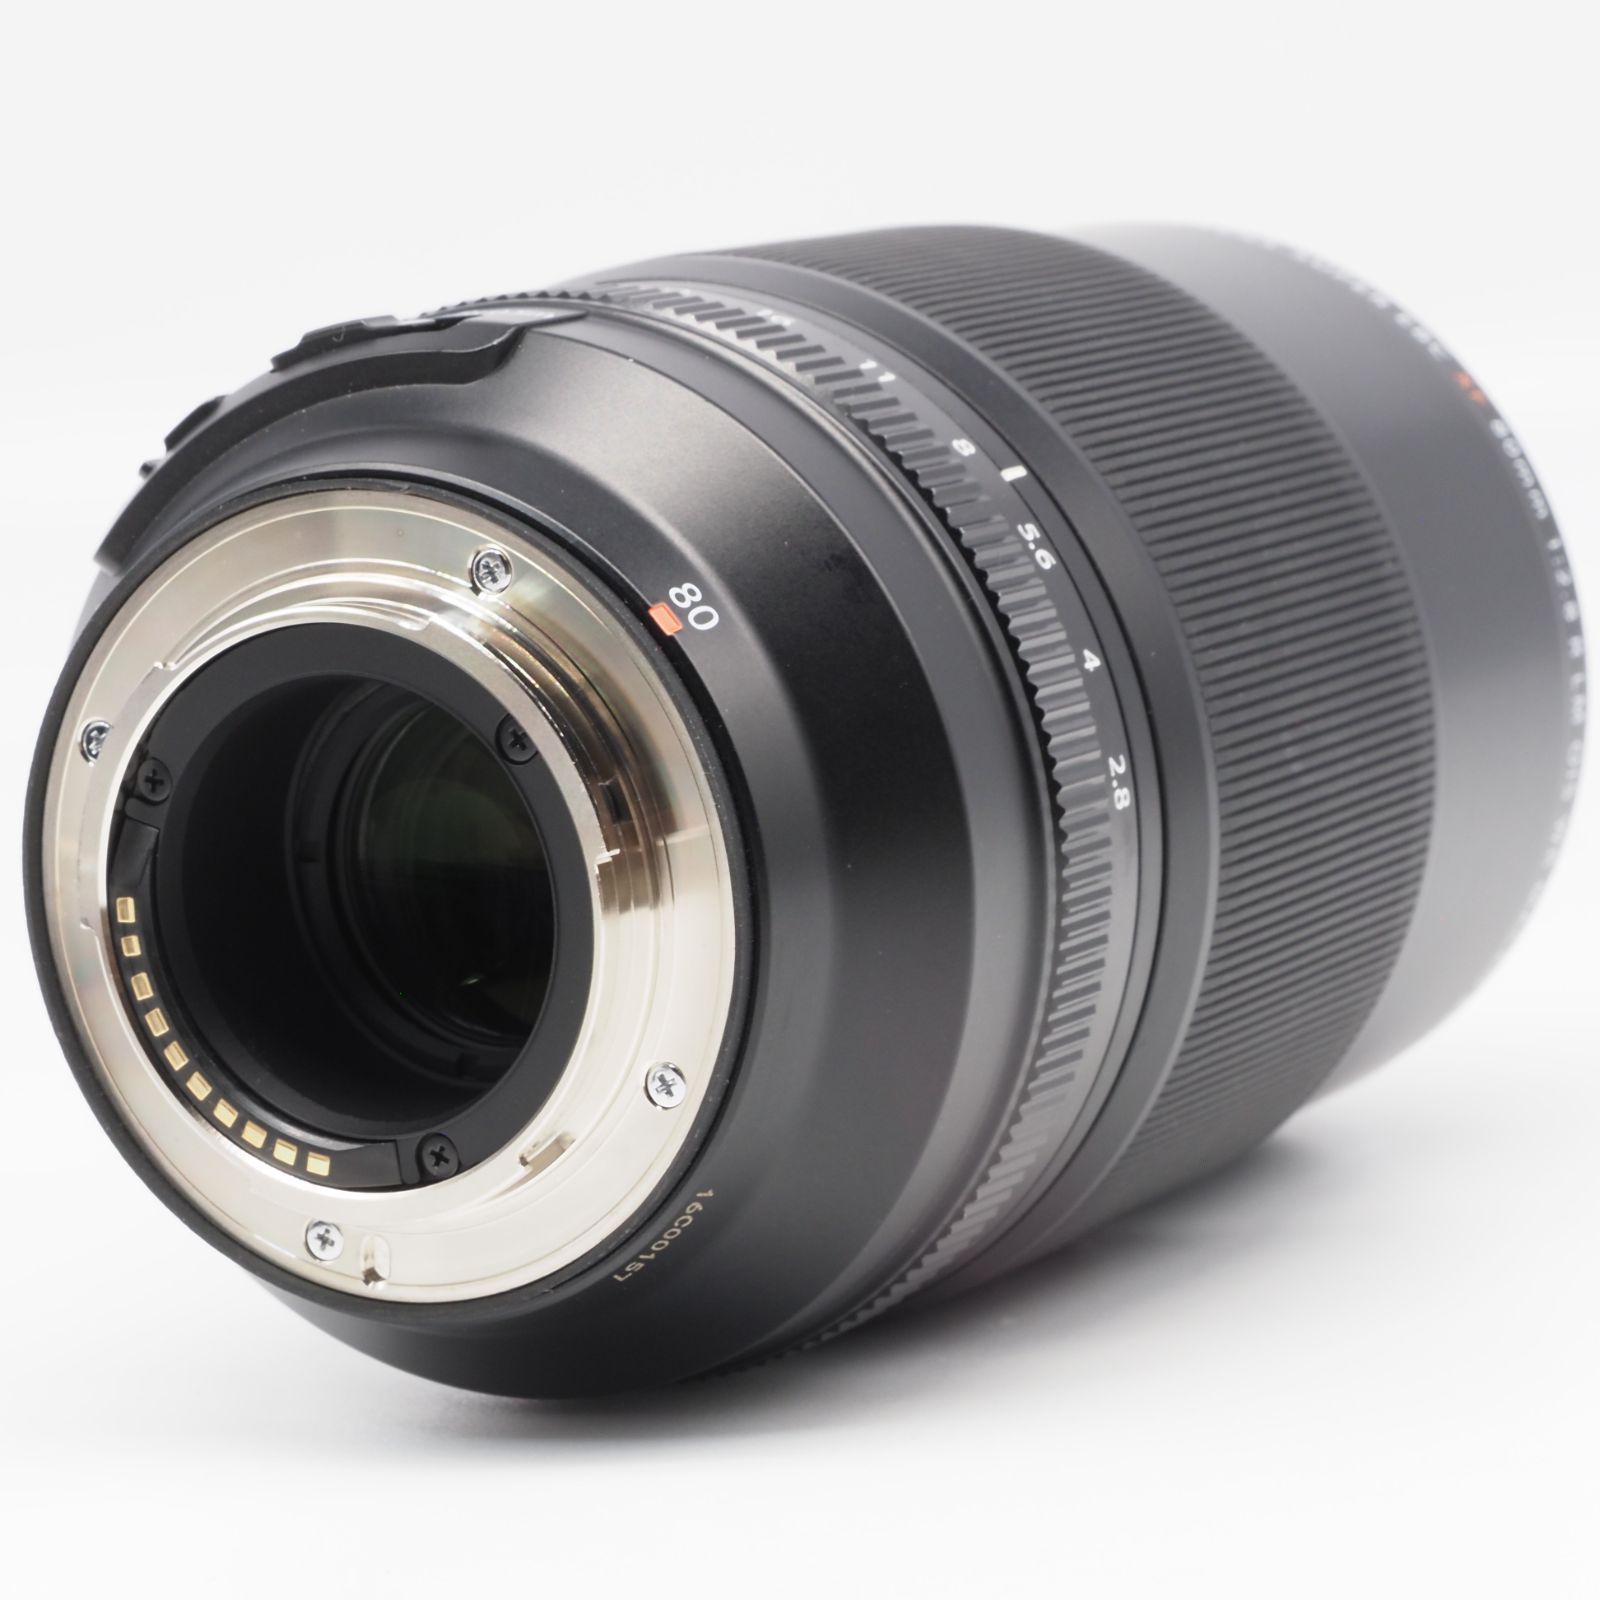 FUJIFILM X 交換レンズ フジノン 単焦点 中望遠マクロ 80mm F2.8 手ブレ補正 防塵防滴耐低温 リニアモーター(静音) 絞りリング  F XF80MMF2.8 R LM OIS WR MACRO 通販